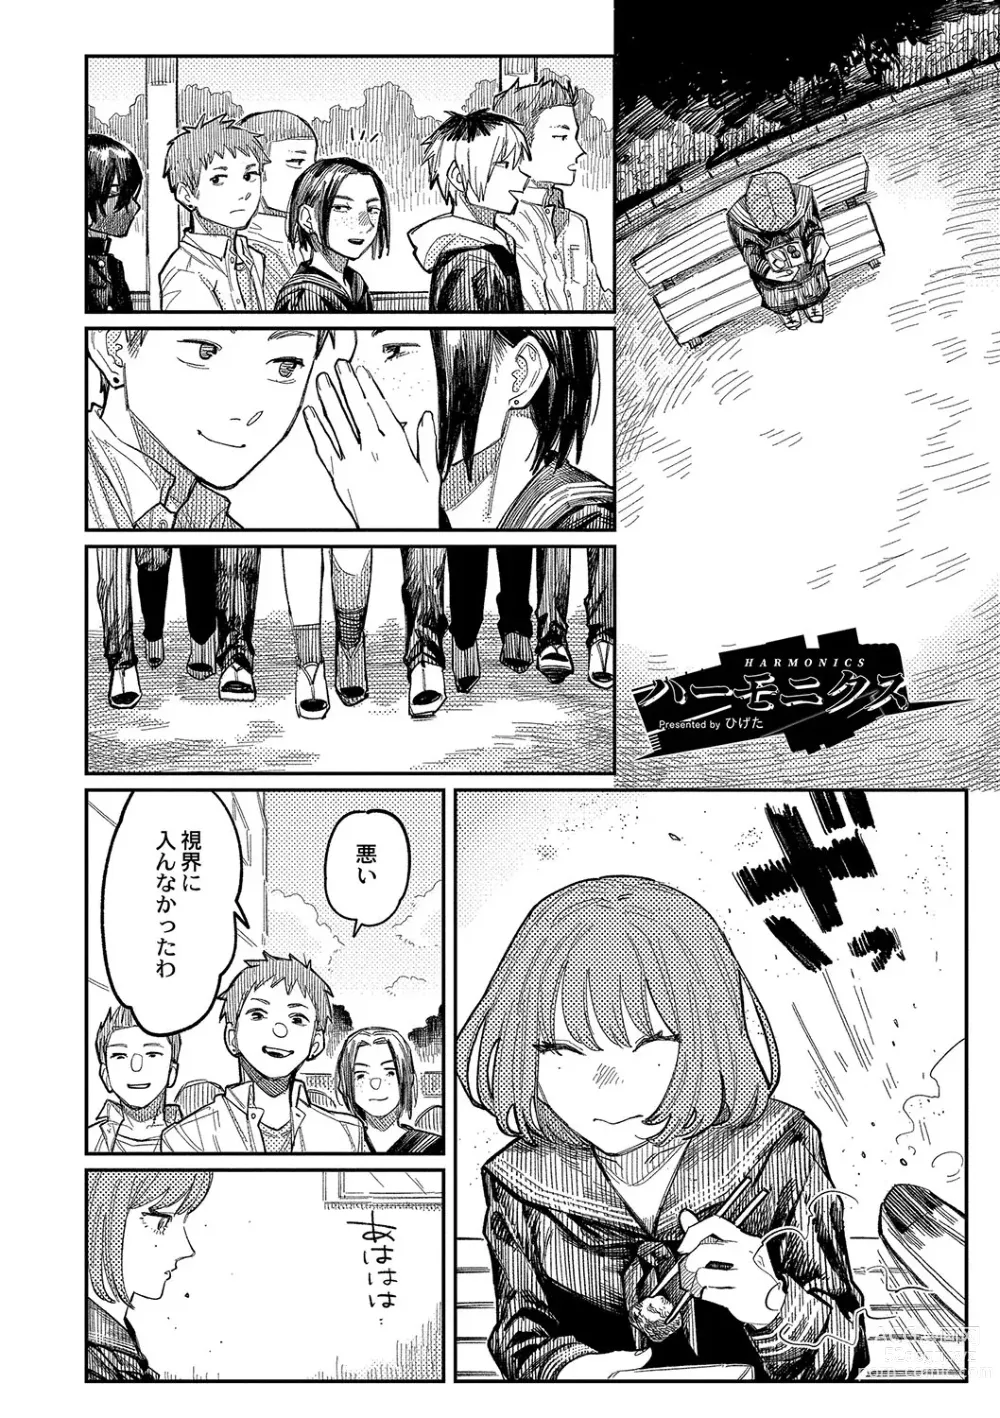 Page 5 of manga Oyasumi, Teen - Good Night, Goodbye